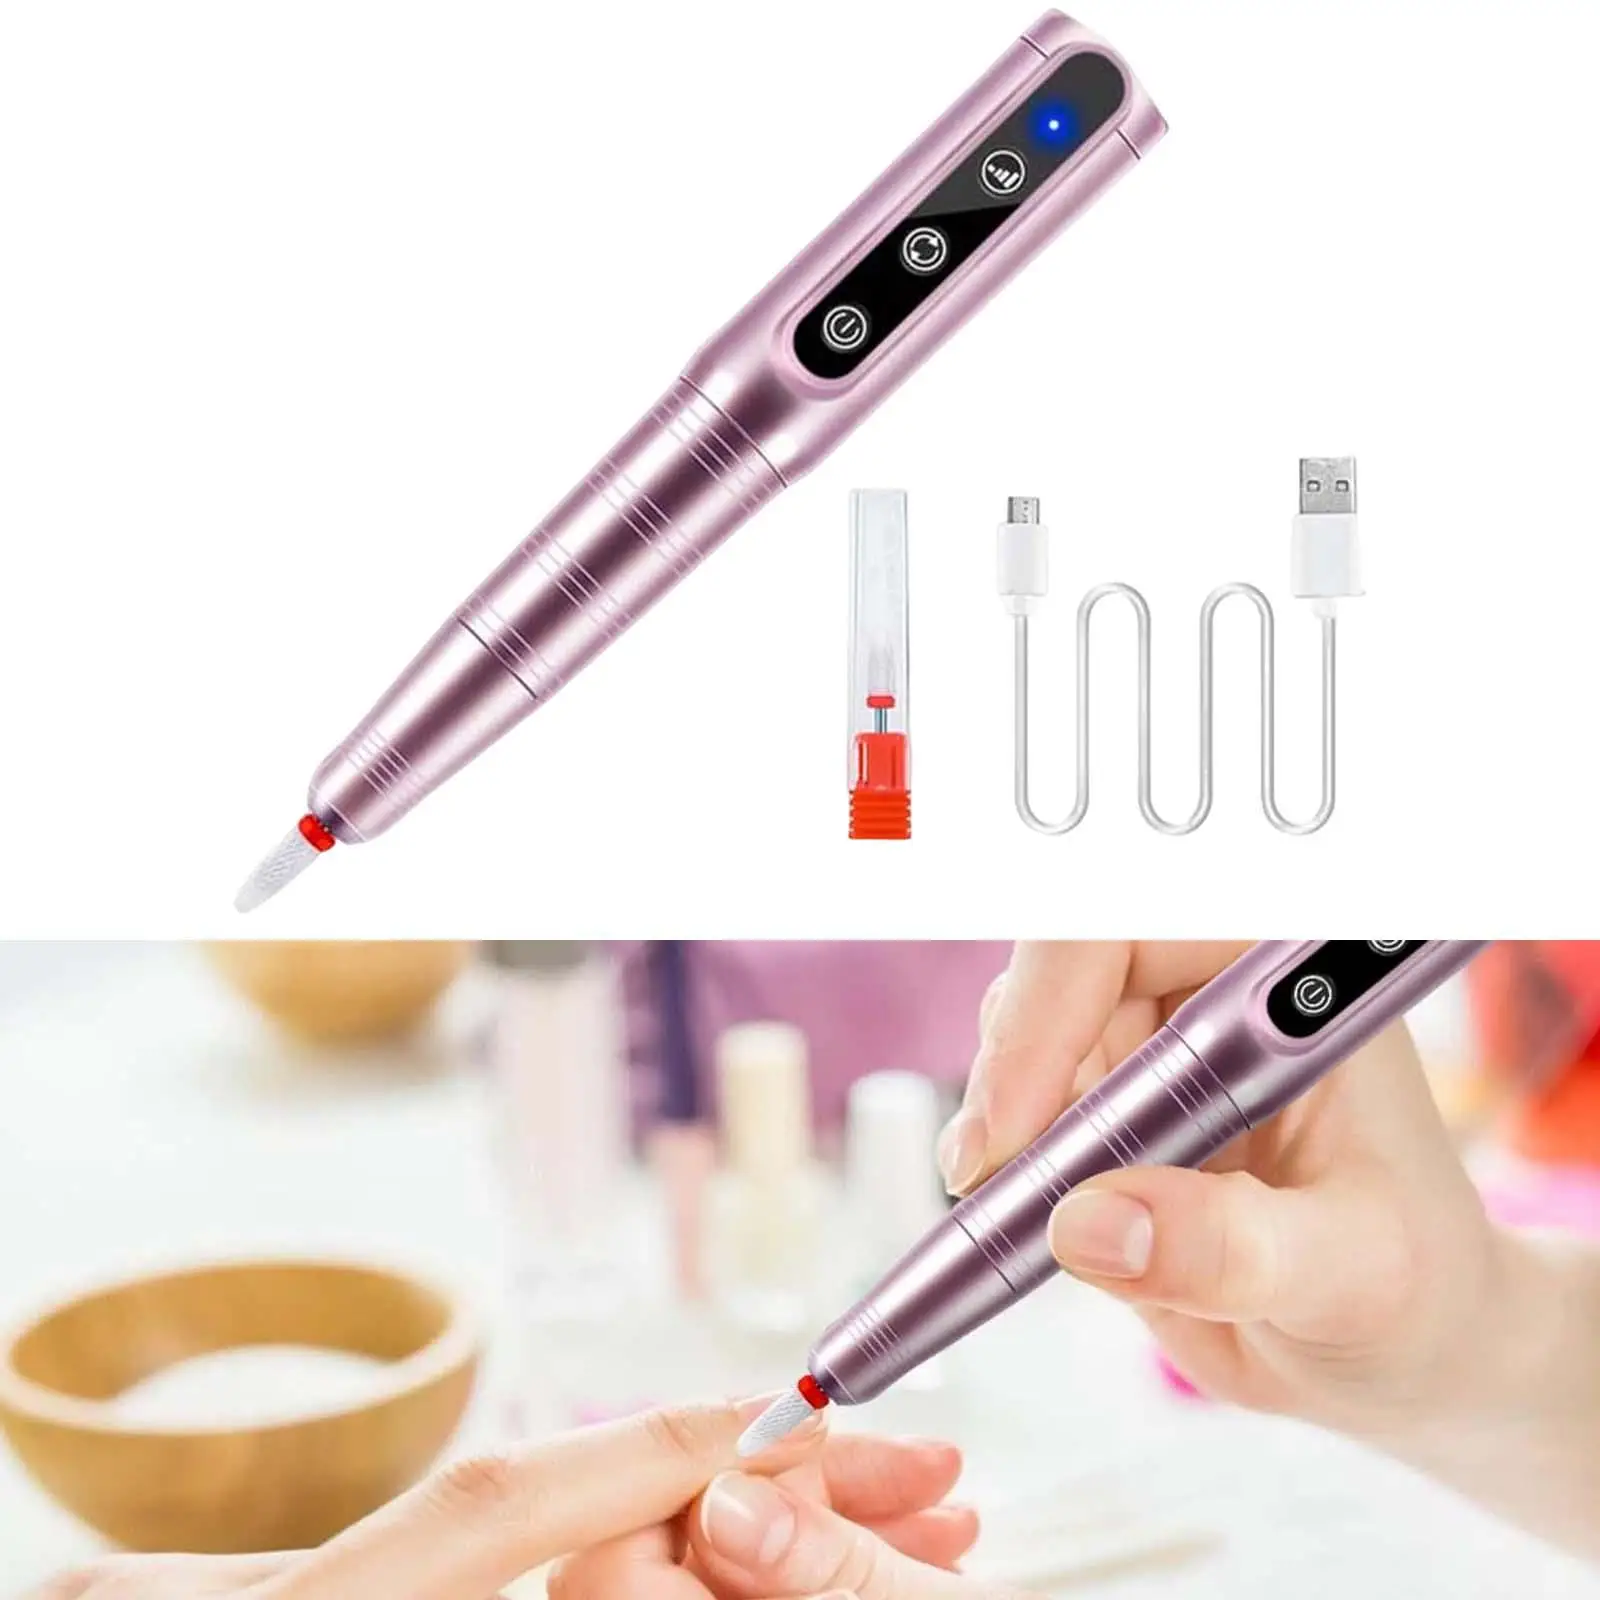 Porfessional Acrylic Nail Dril USB Electric Nail Drill Machine for Manicure Pedicure Polishing Shape Tools